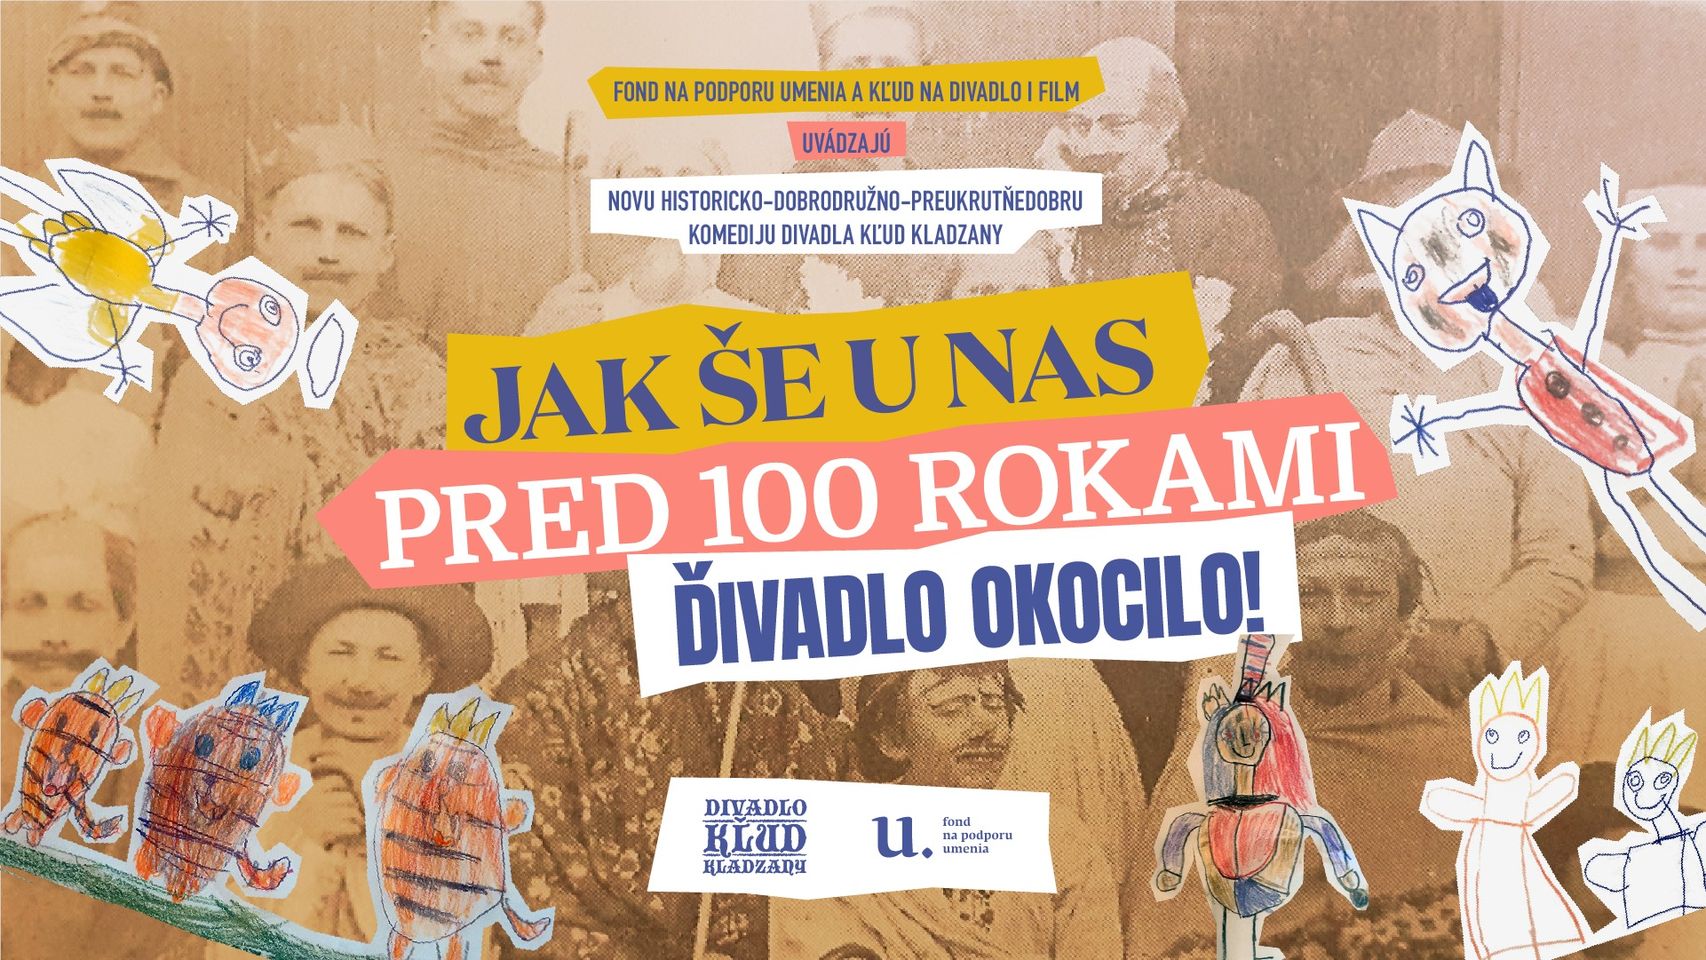 Divadlo KĽUD: Jak še u nas pred 100 rokami ďivadlo okocilo! (LVKP) KASÁRNE/KULTURPARK